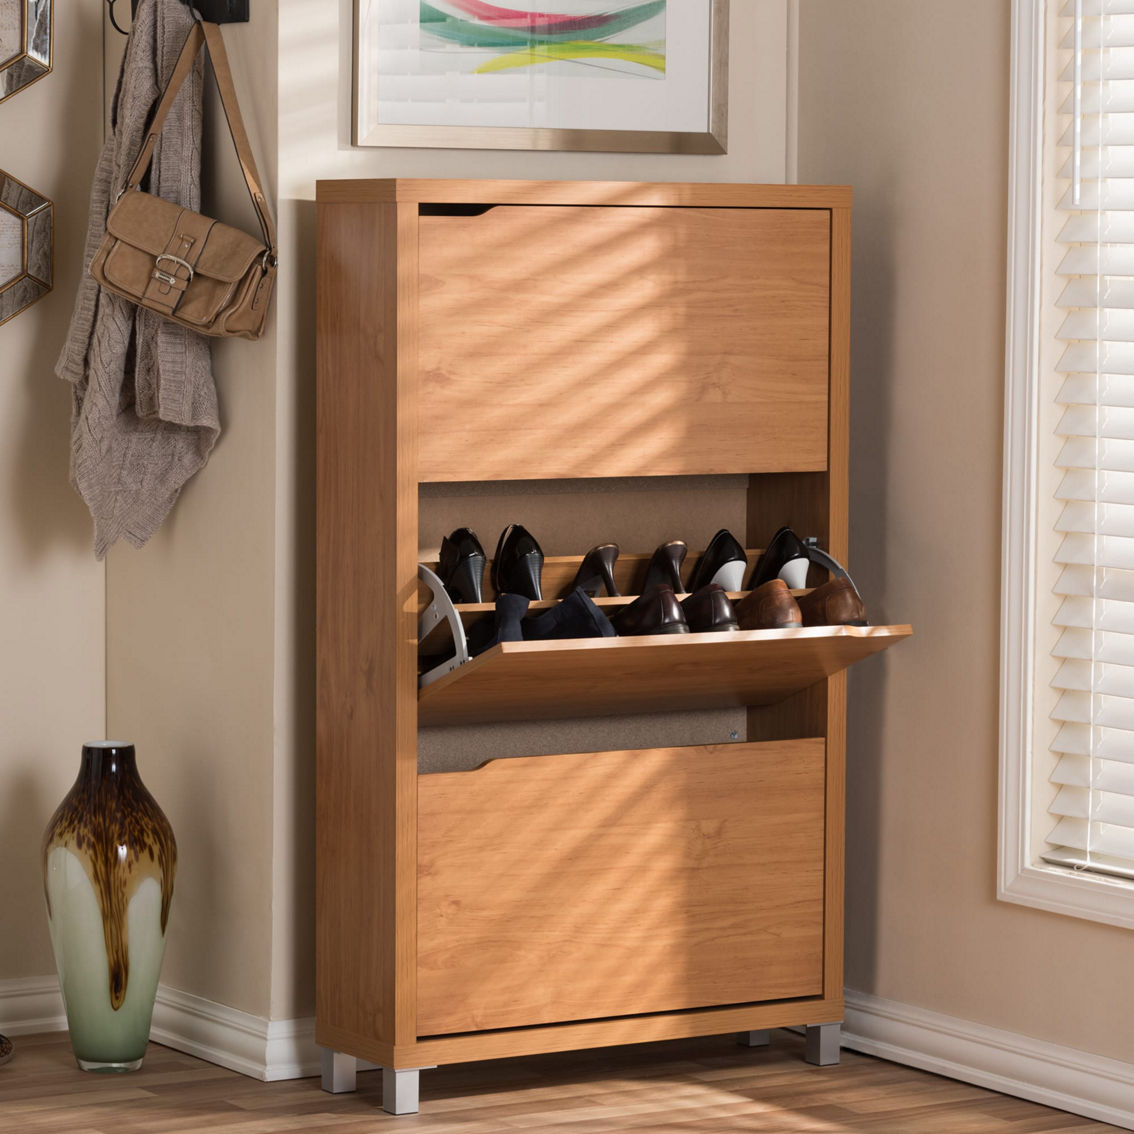 Baxton Studio Simms Maple Shoe Cabinet - Image 2 of 2